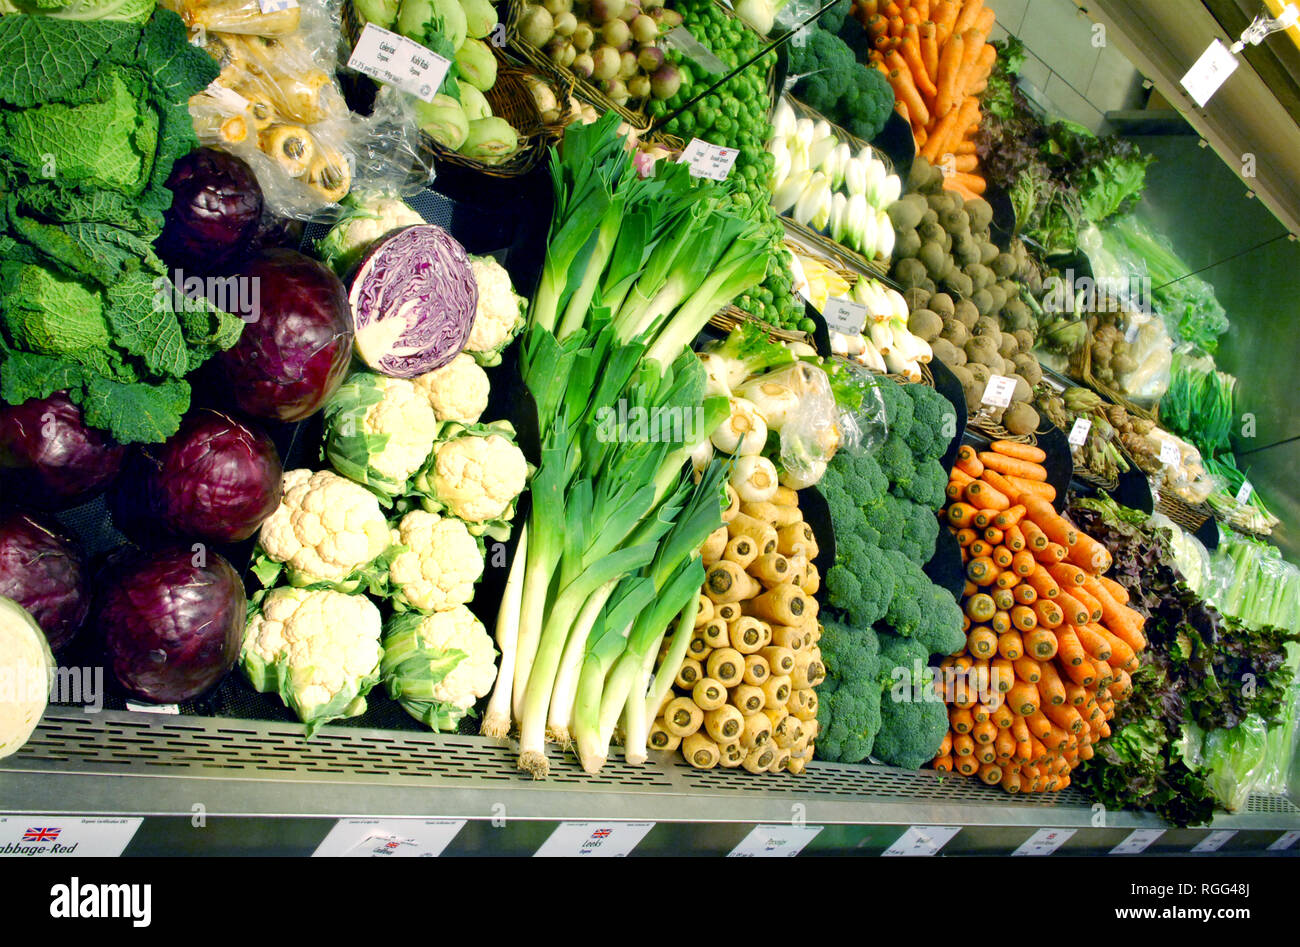 Veg for sale in Planet Organic, organic supermarket. Organic grocer. Stock Photo